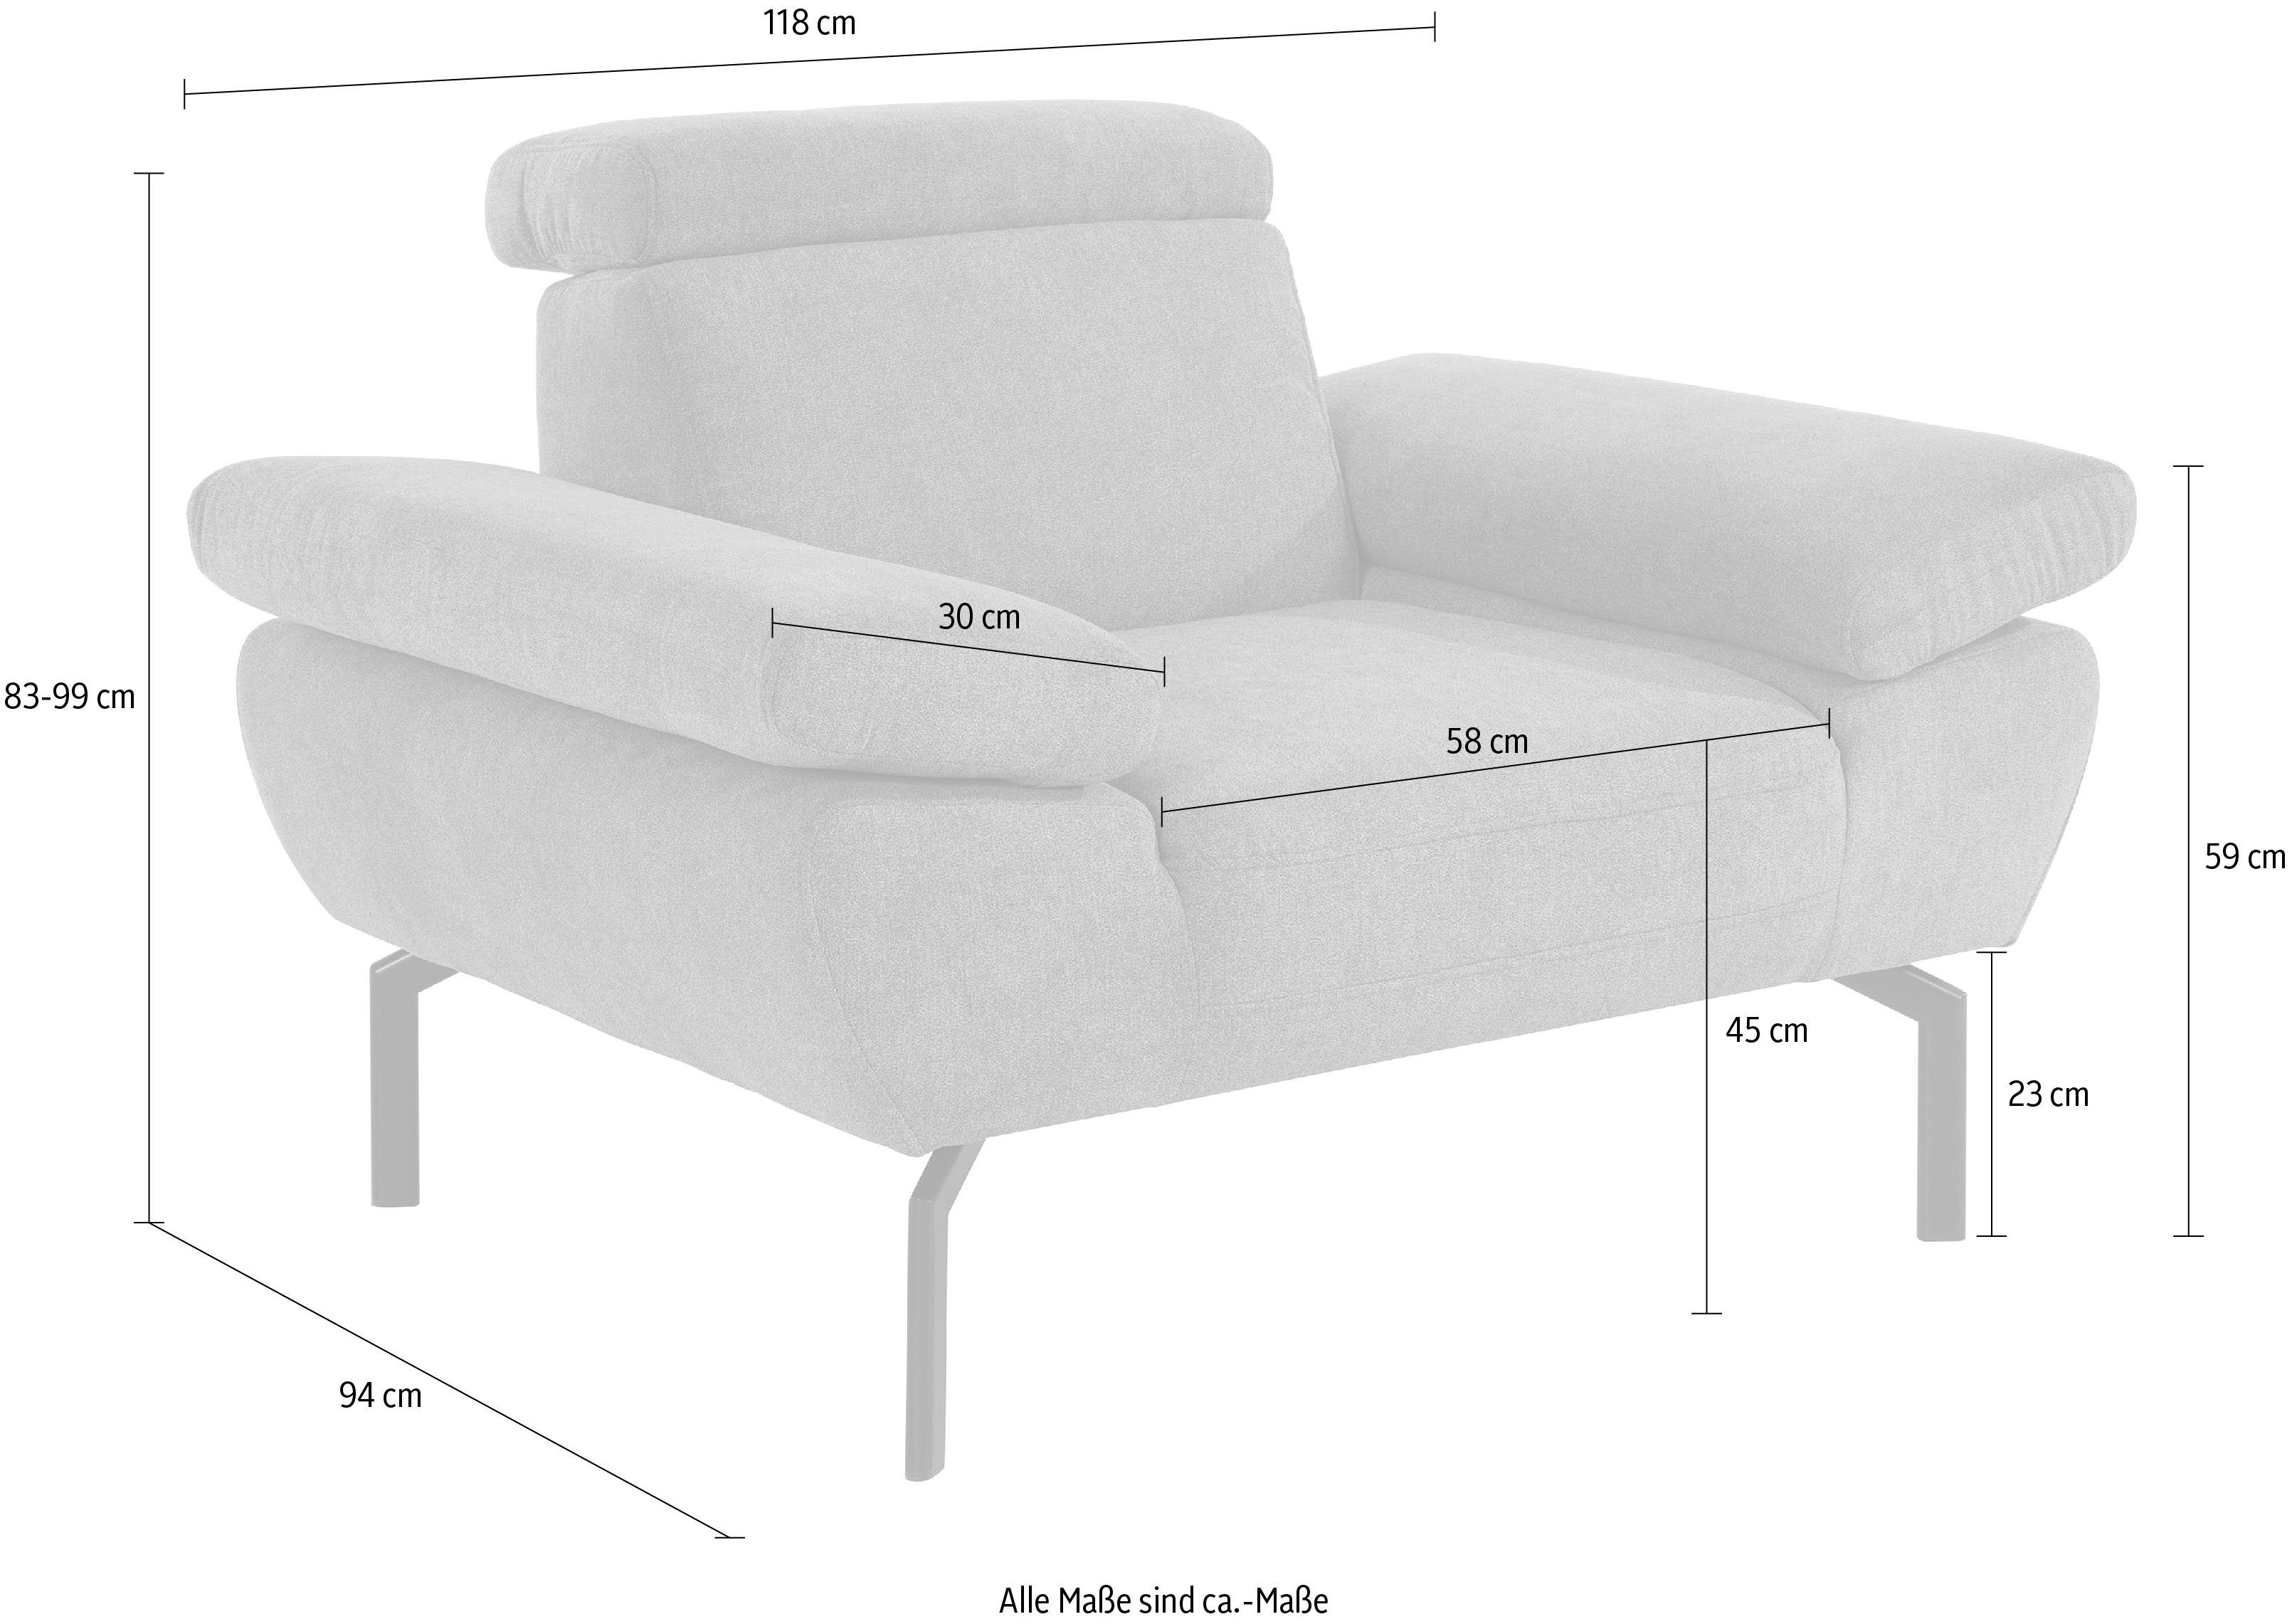 Rückenverstellung, Style mit Luxus-Microfaser Places in wahlweise Sessel Luxus, Lederoptik Trapino of